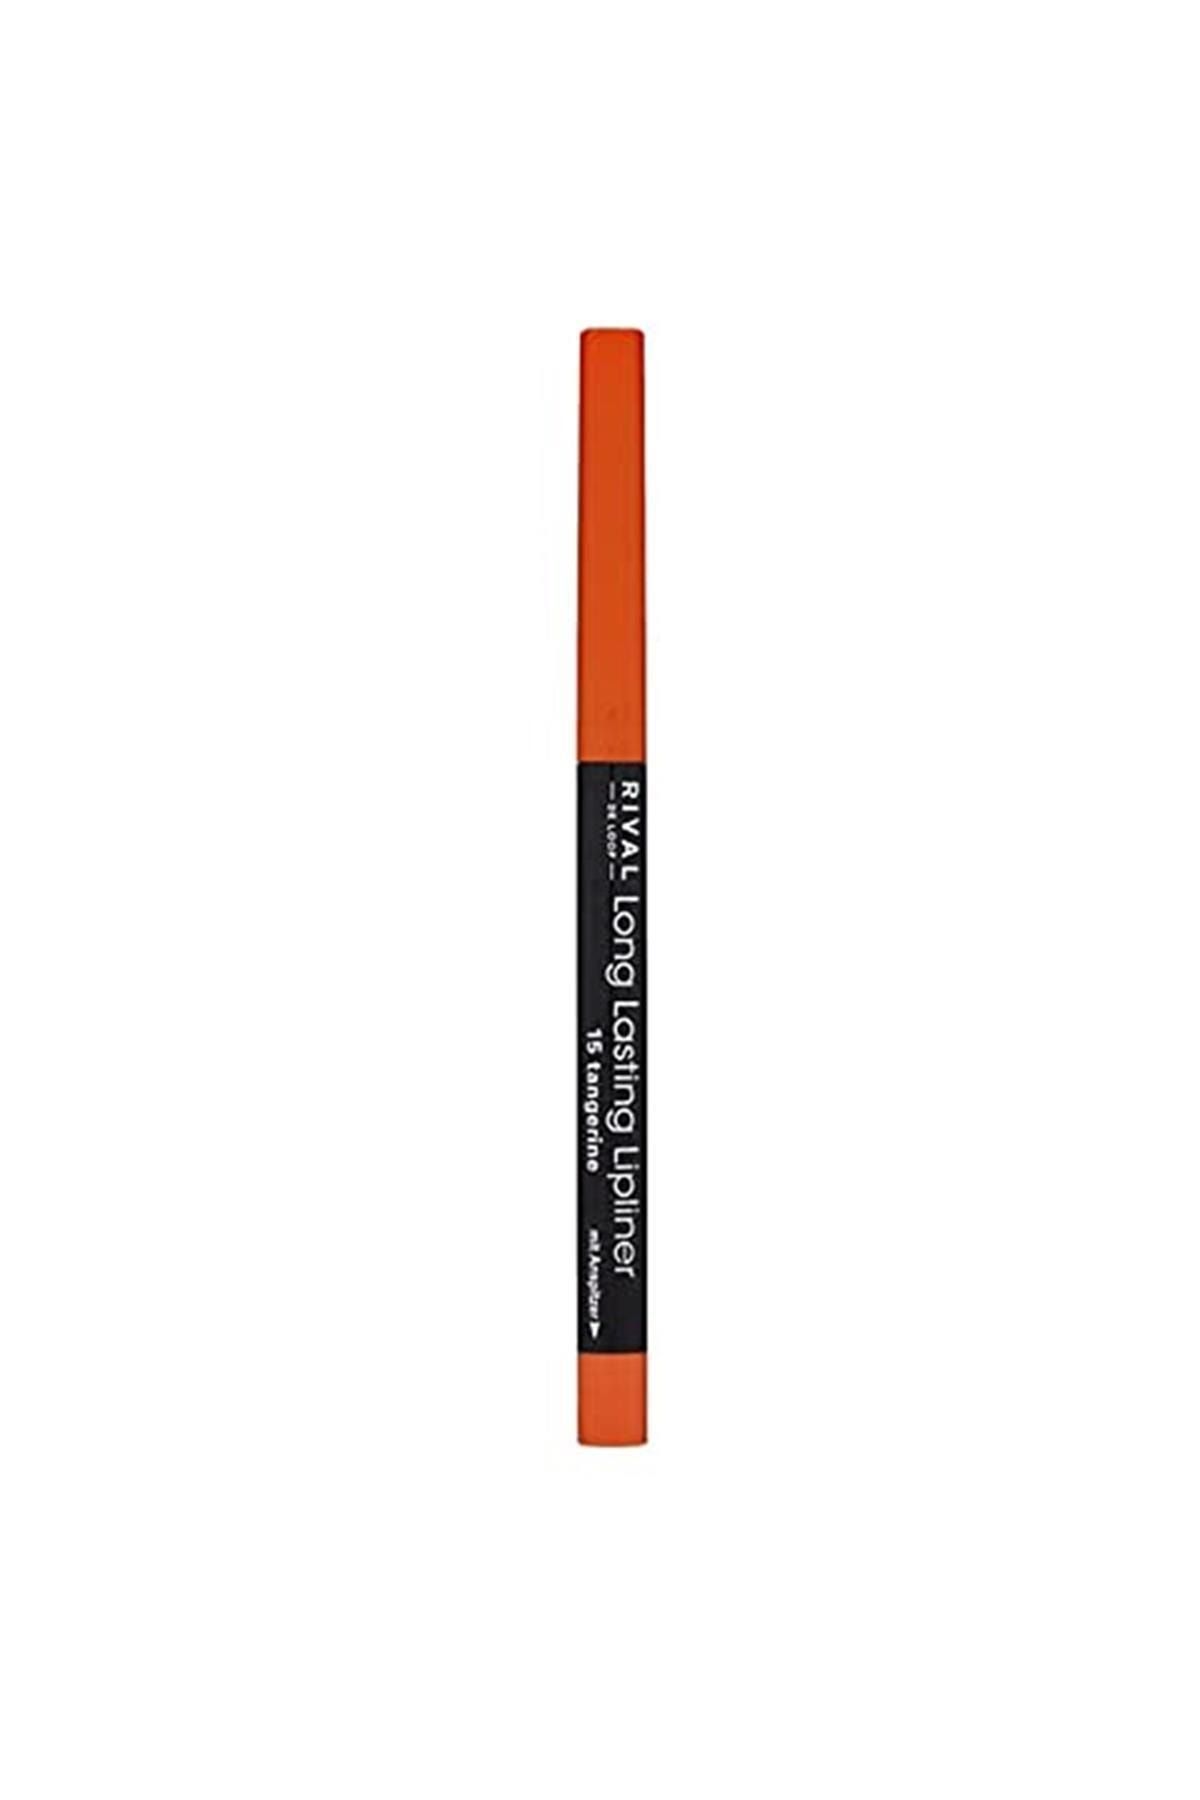 Rival De Loop Marka: Dudak Kalemi Kalıcı No:15 Tangerine 1 Adet Kategori: Dudak Kalemi